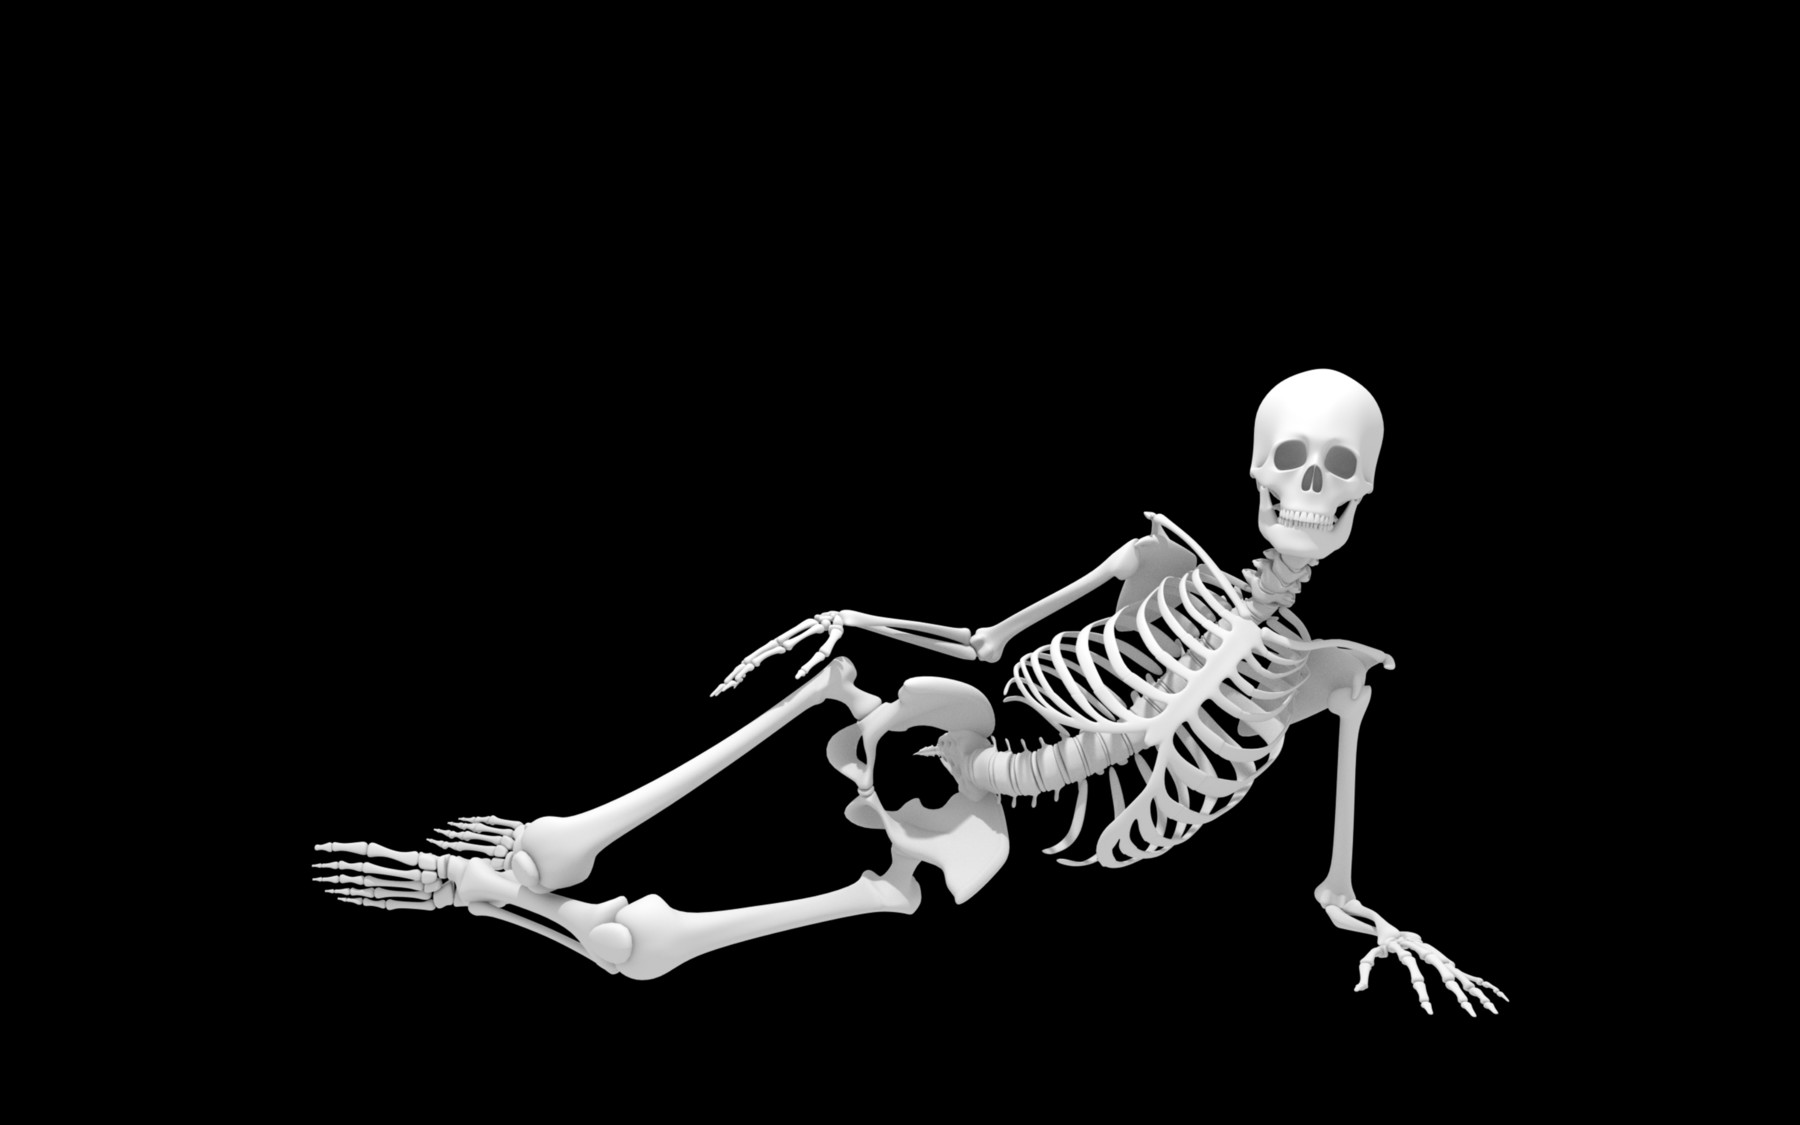 ArtStation - Skeleton Poses (reference images) | Resources